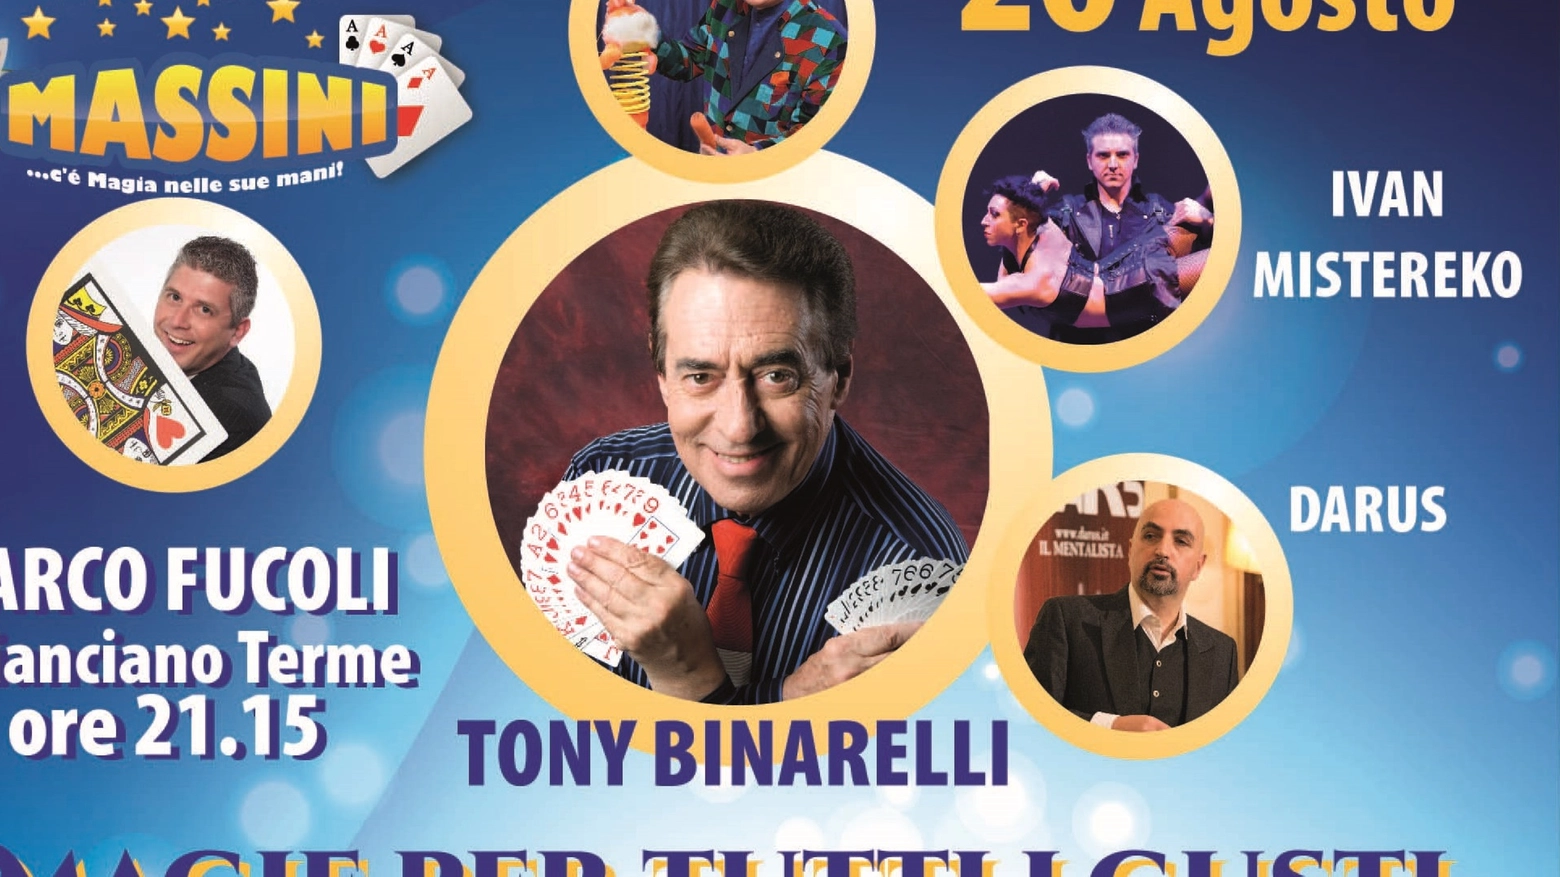 Tony Binarelli